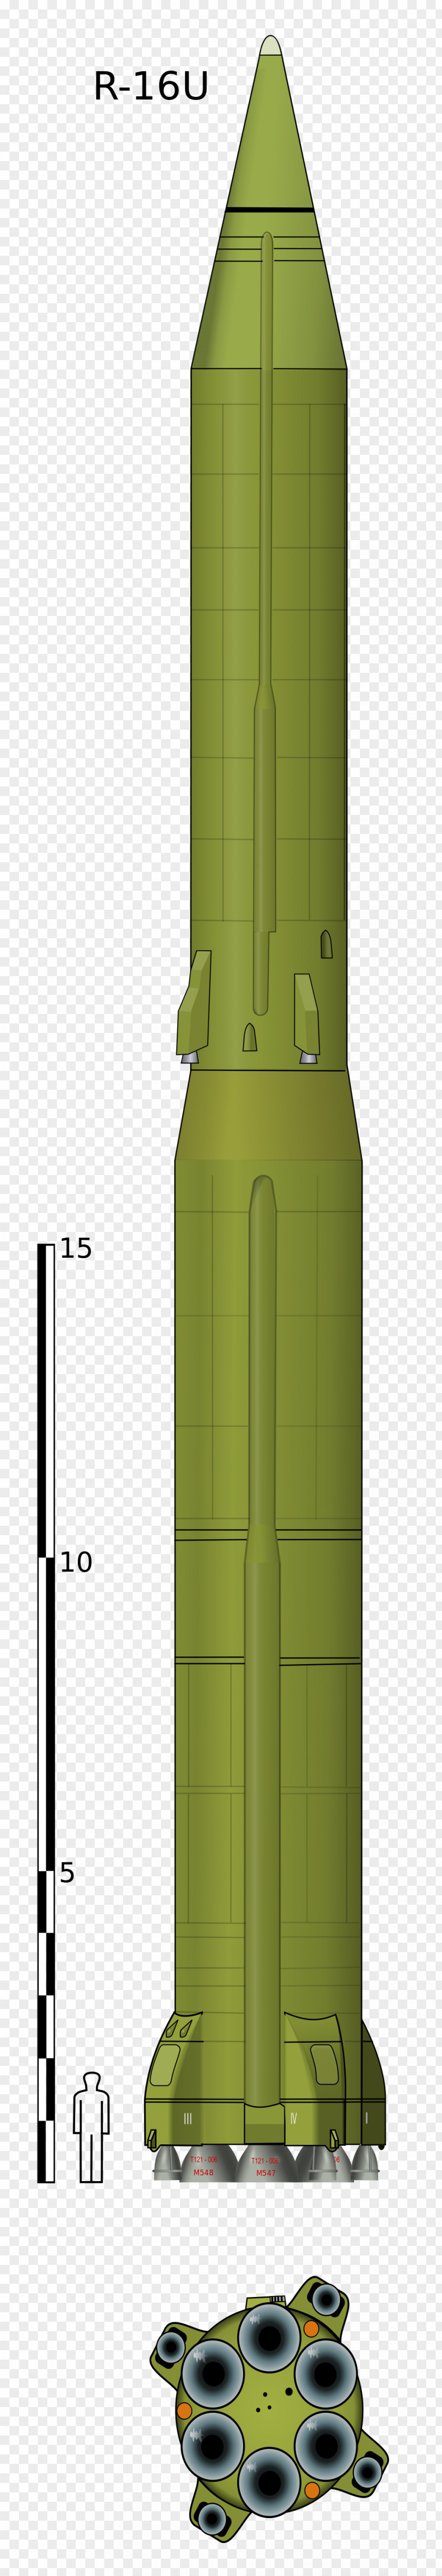 Rocket R-16 Intercontinental Ballistic Missile PNG